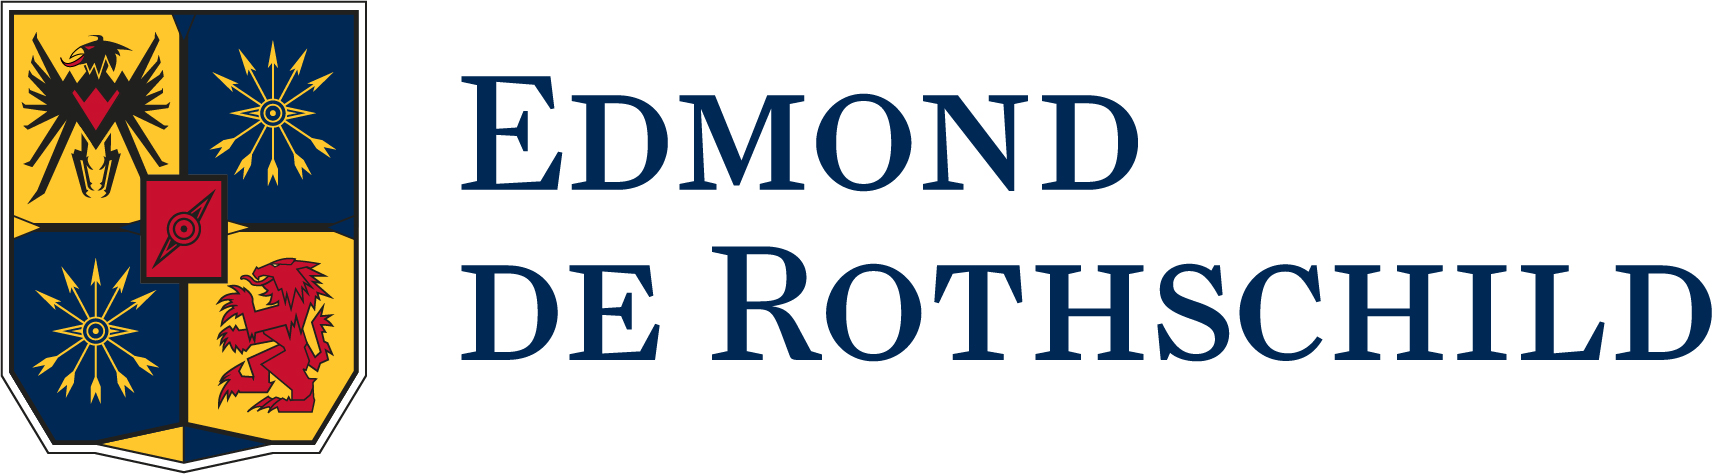 Edmond De Rothschild logo